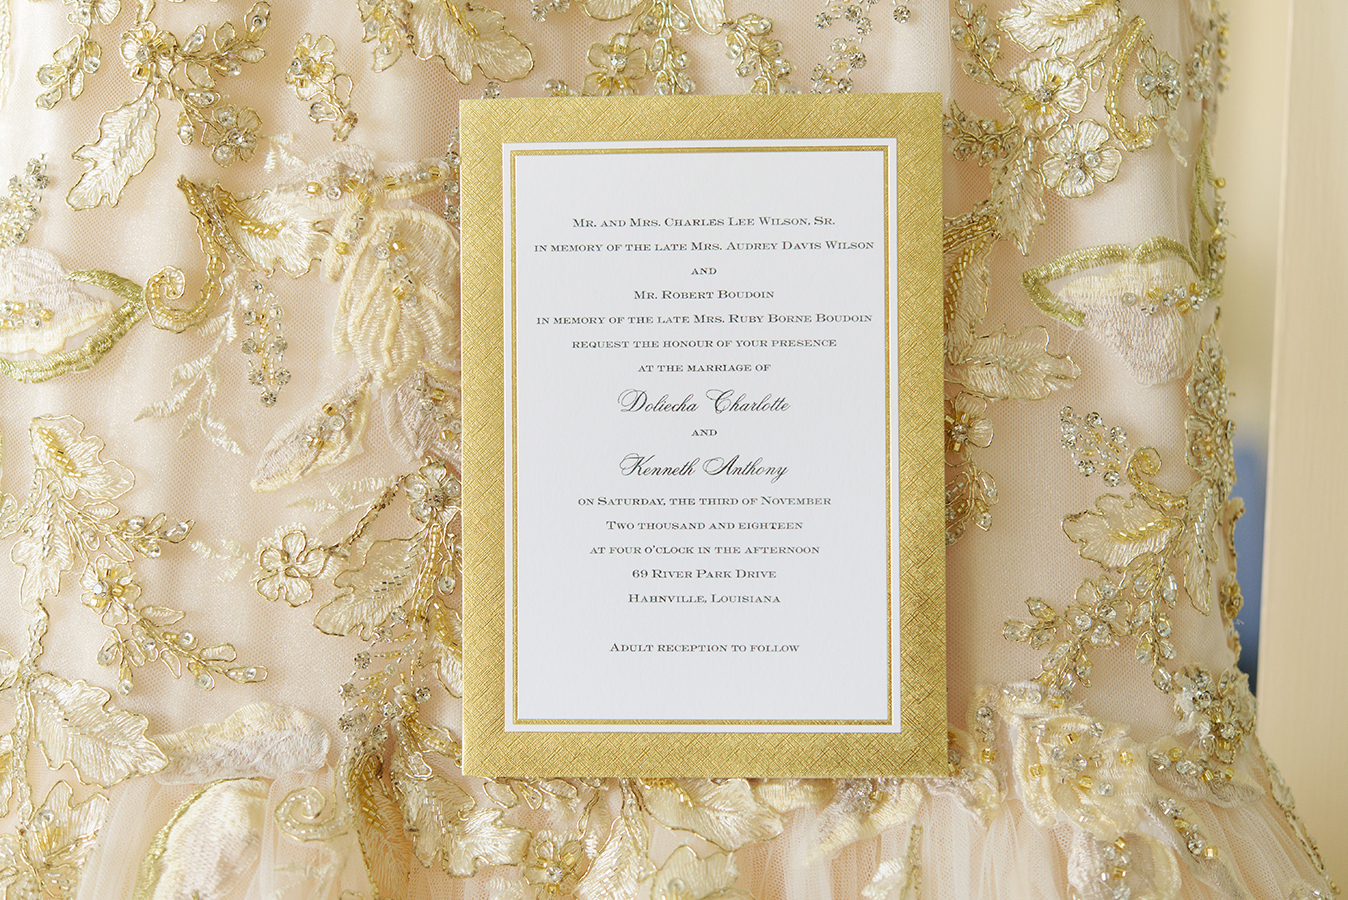 Doliecha and Kenneth's wedding invitation